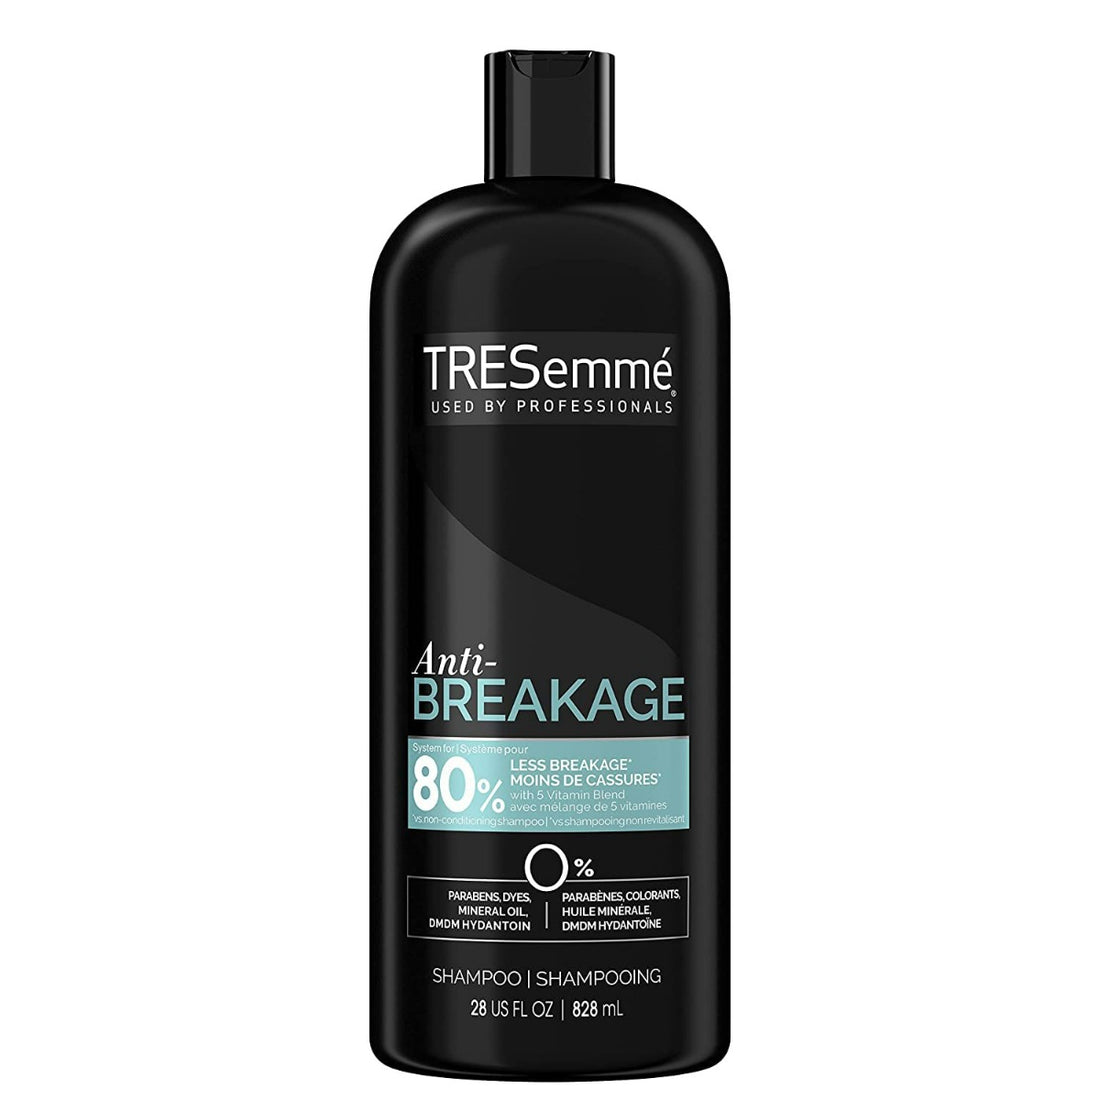 Tresemme Anti-Breakage Shampoo for Damaged Hair (828ml)